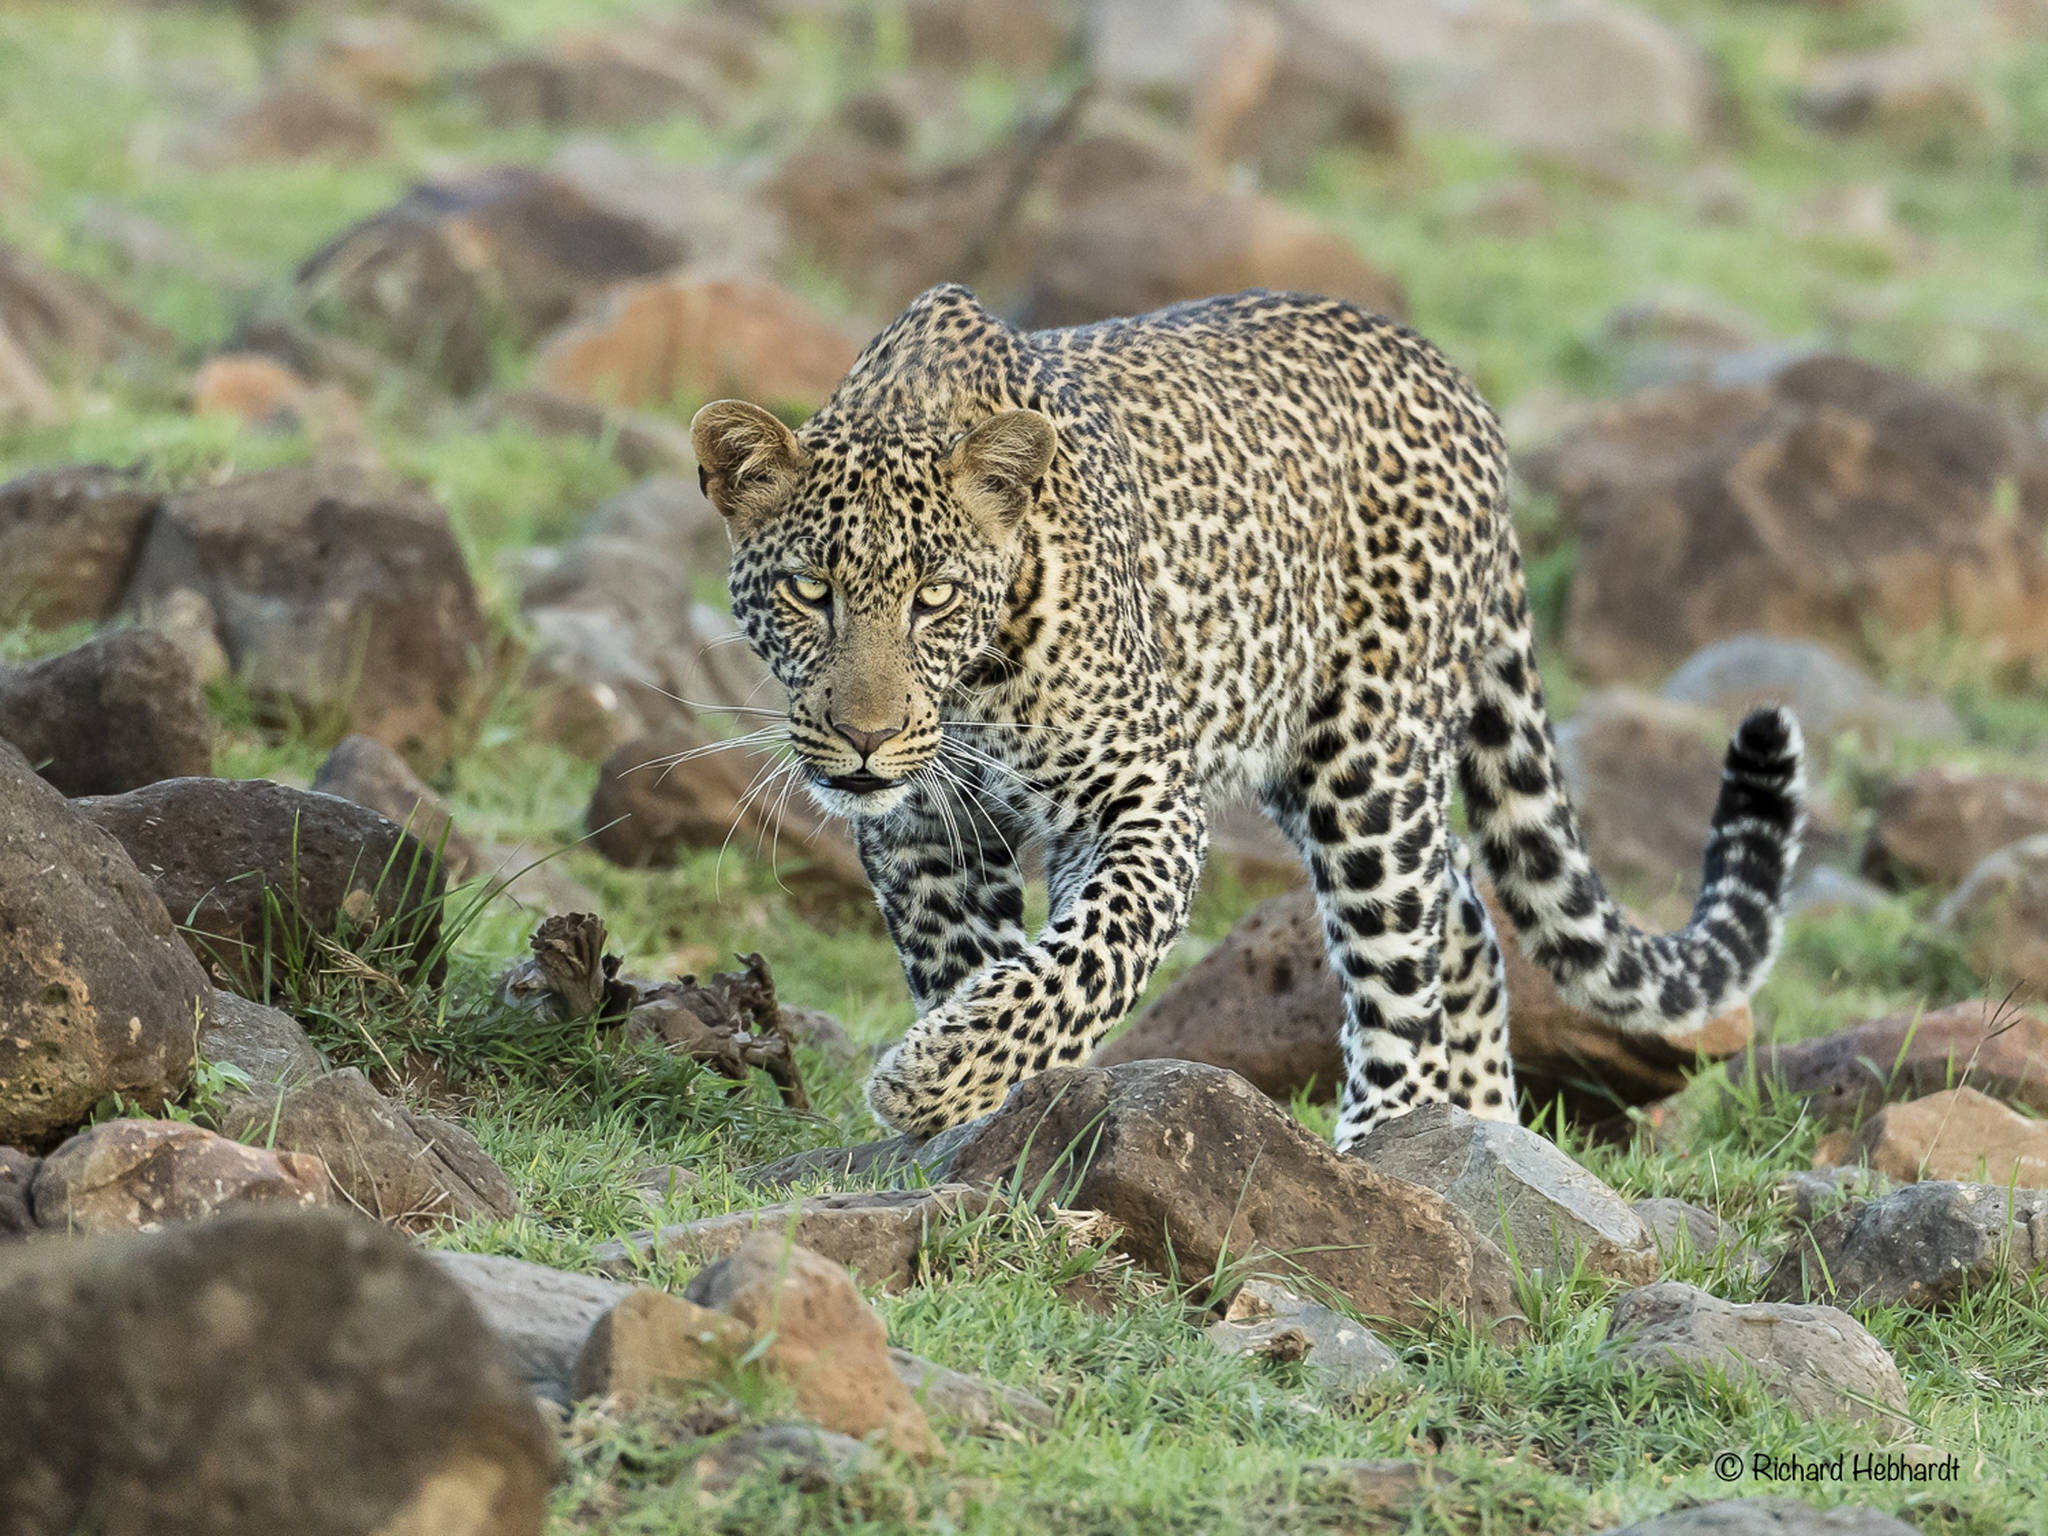 A female leopard pursues her prey in Kenya. (Photo by Richard Hebhardt)